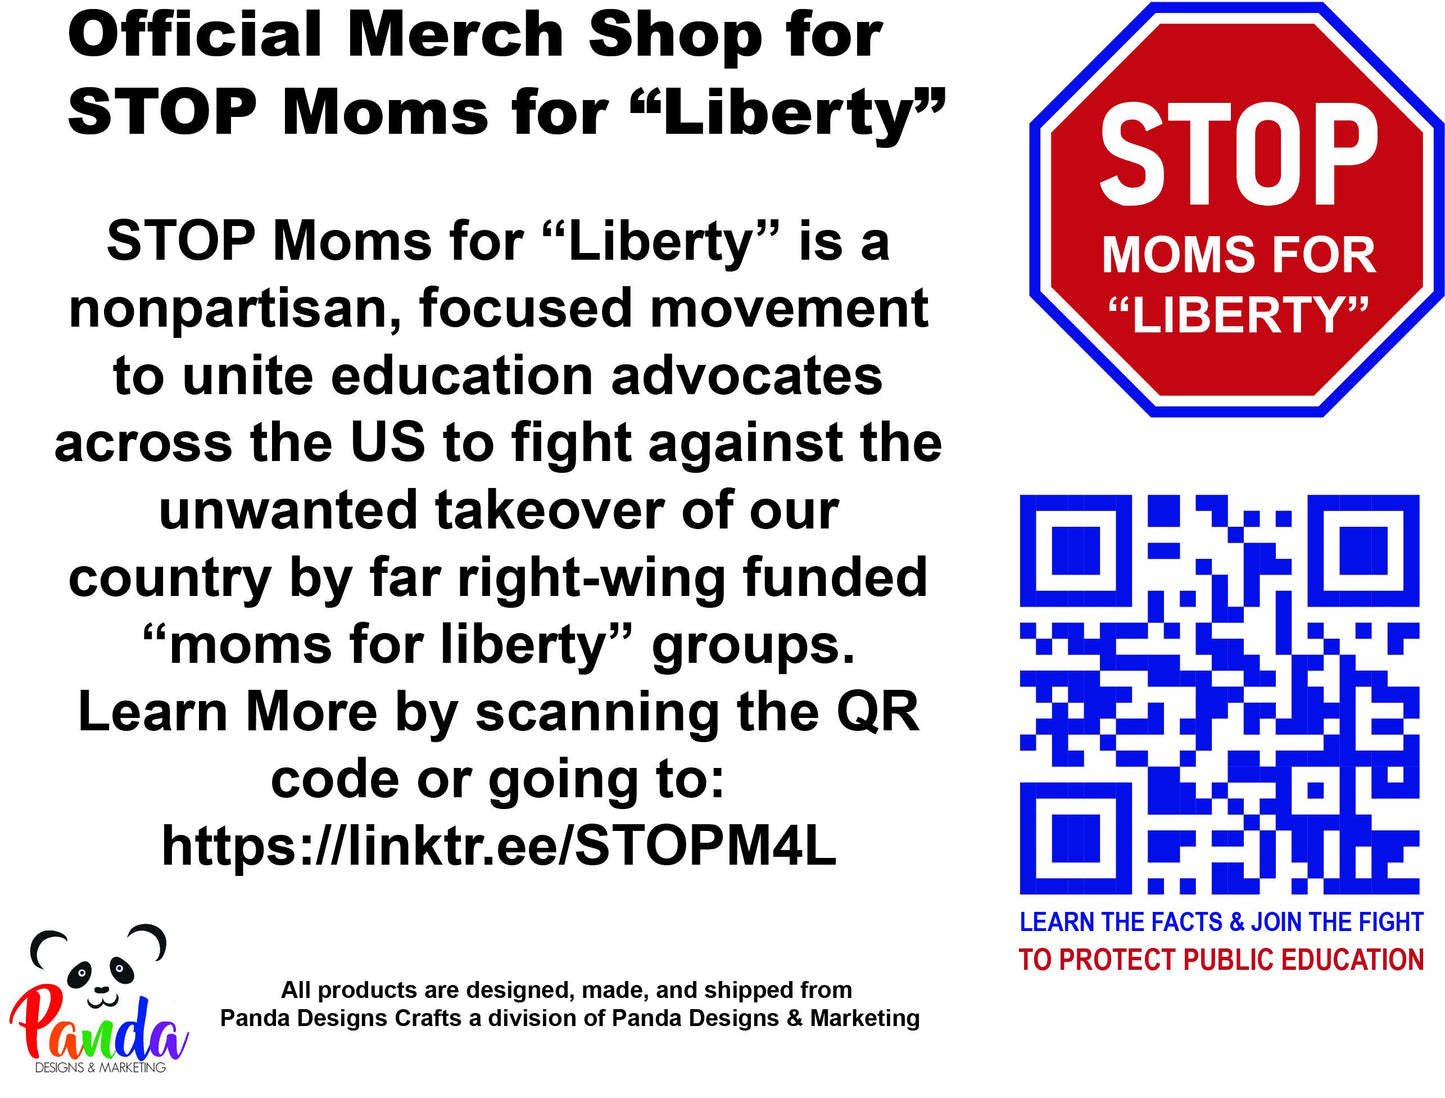 STOP Moms for Liberty 8x10 Aluminum sign